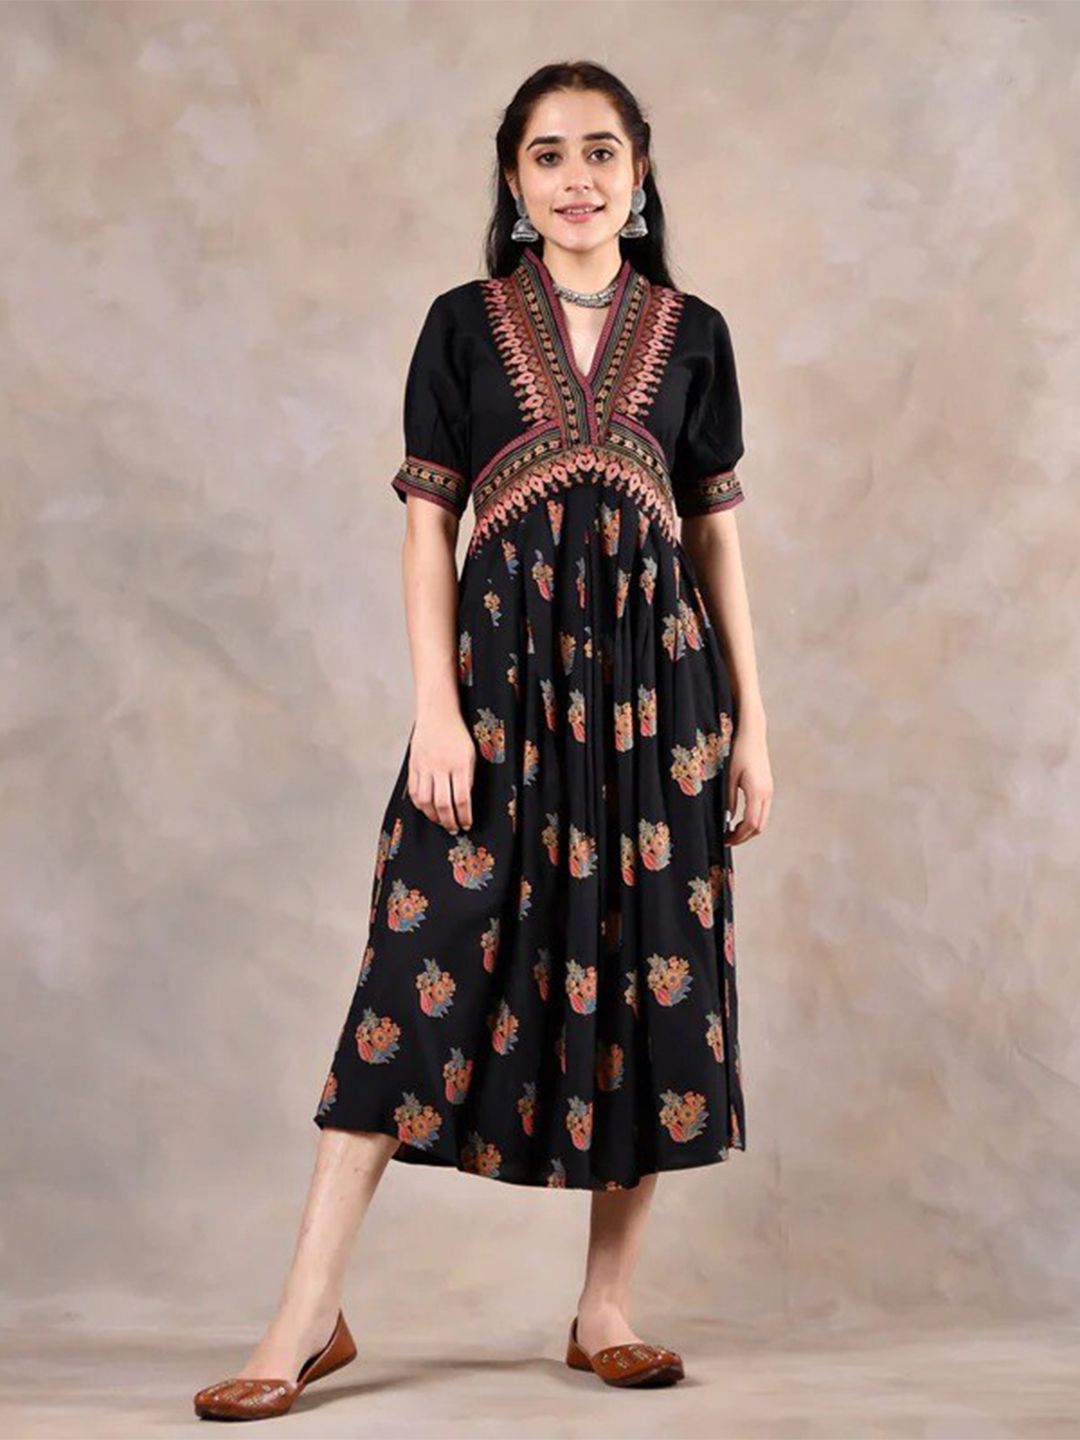 Rustorange Black Ethnic Motifs Rayon A-Line Midi Dress Price in India